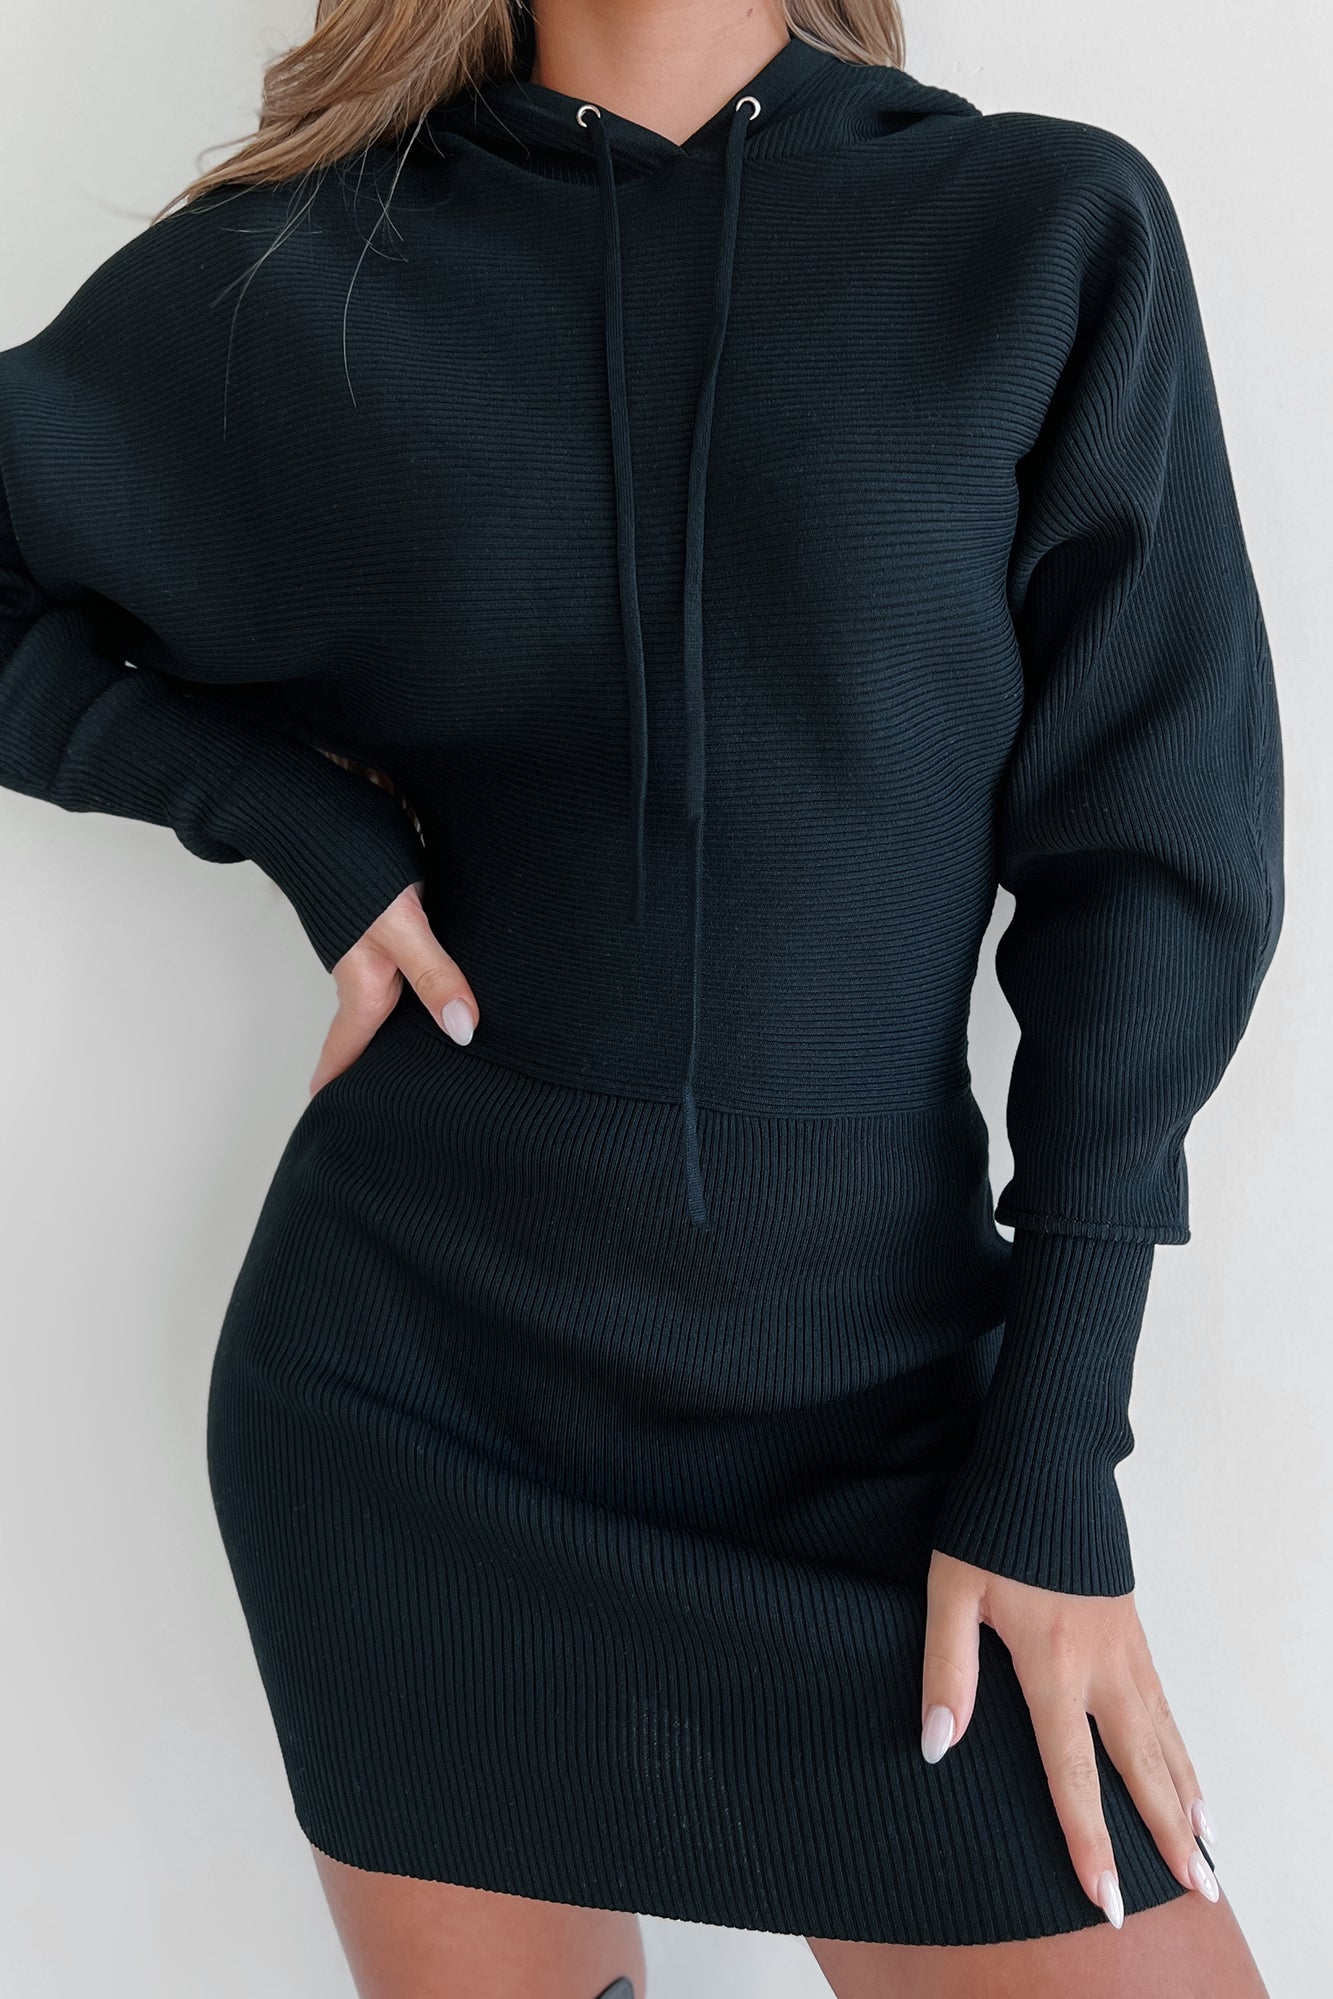 End Of The Road Hooded Sweater Dress (Black) - NanaMacs